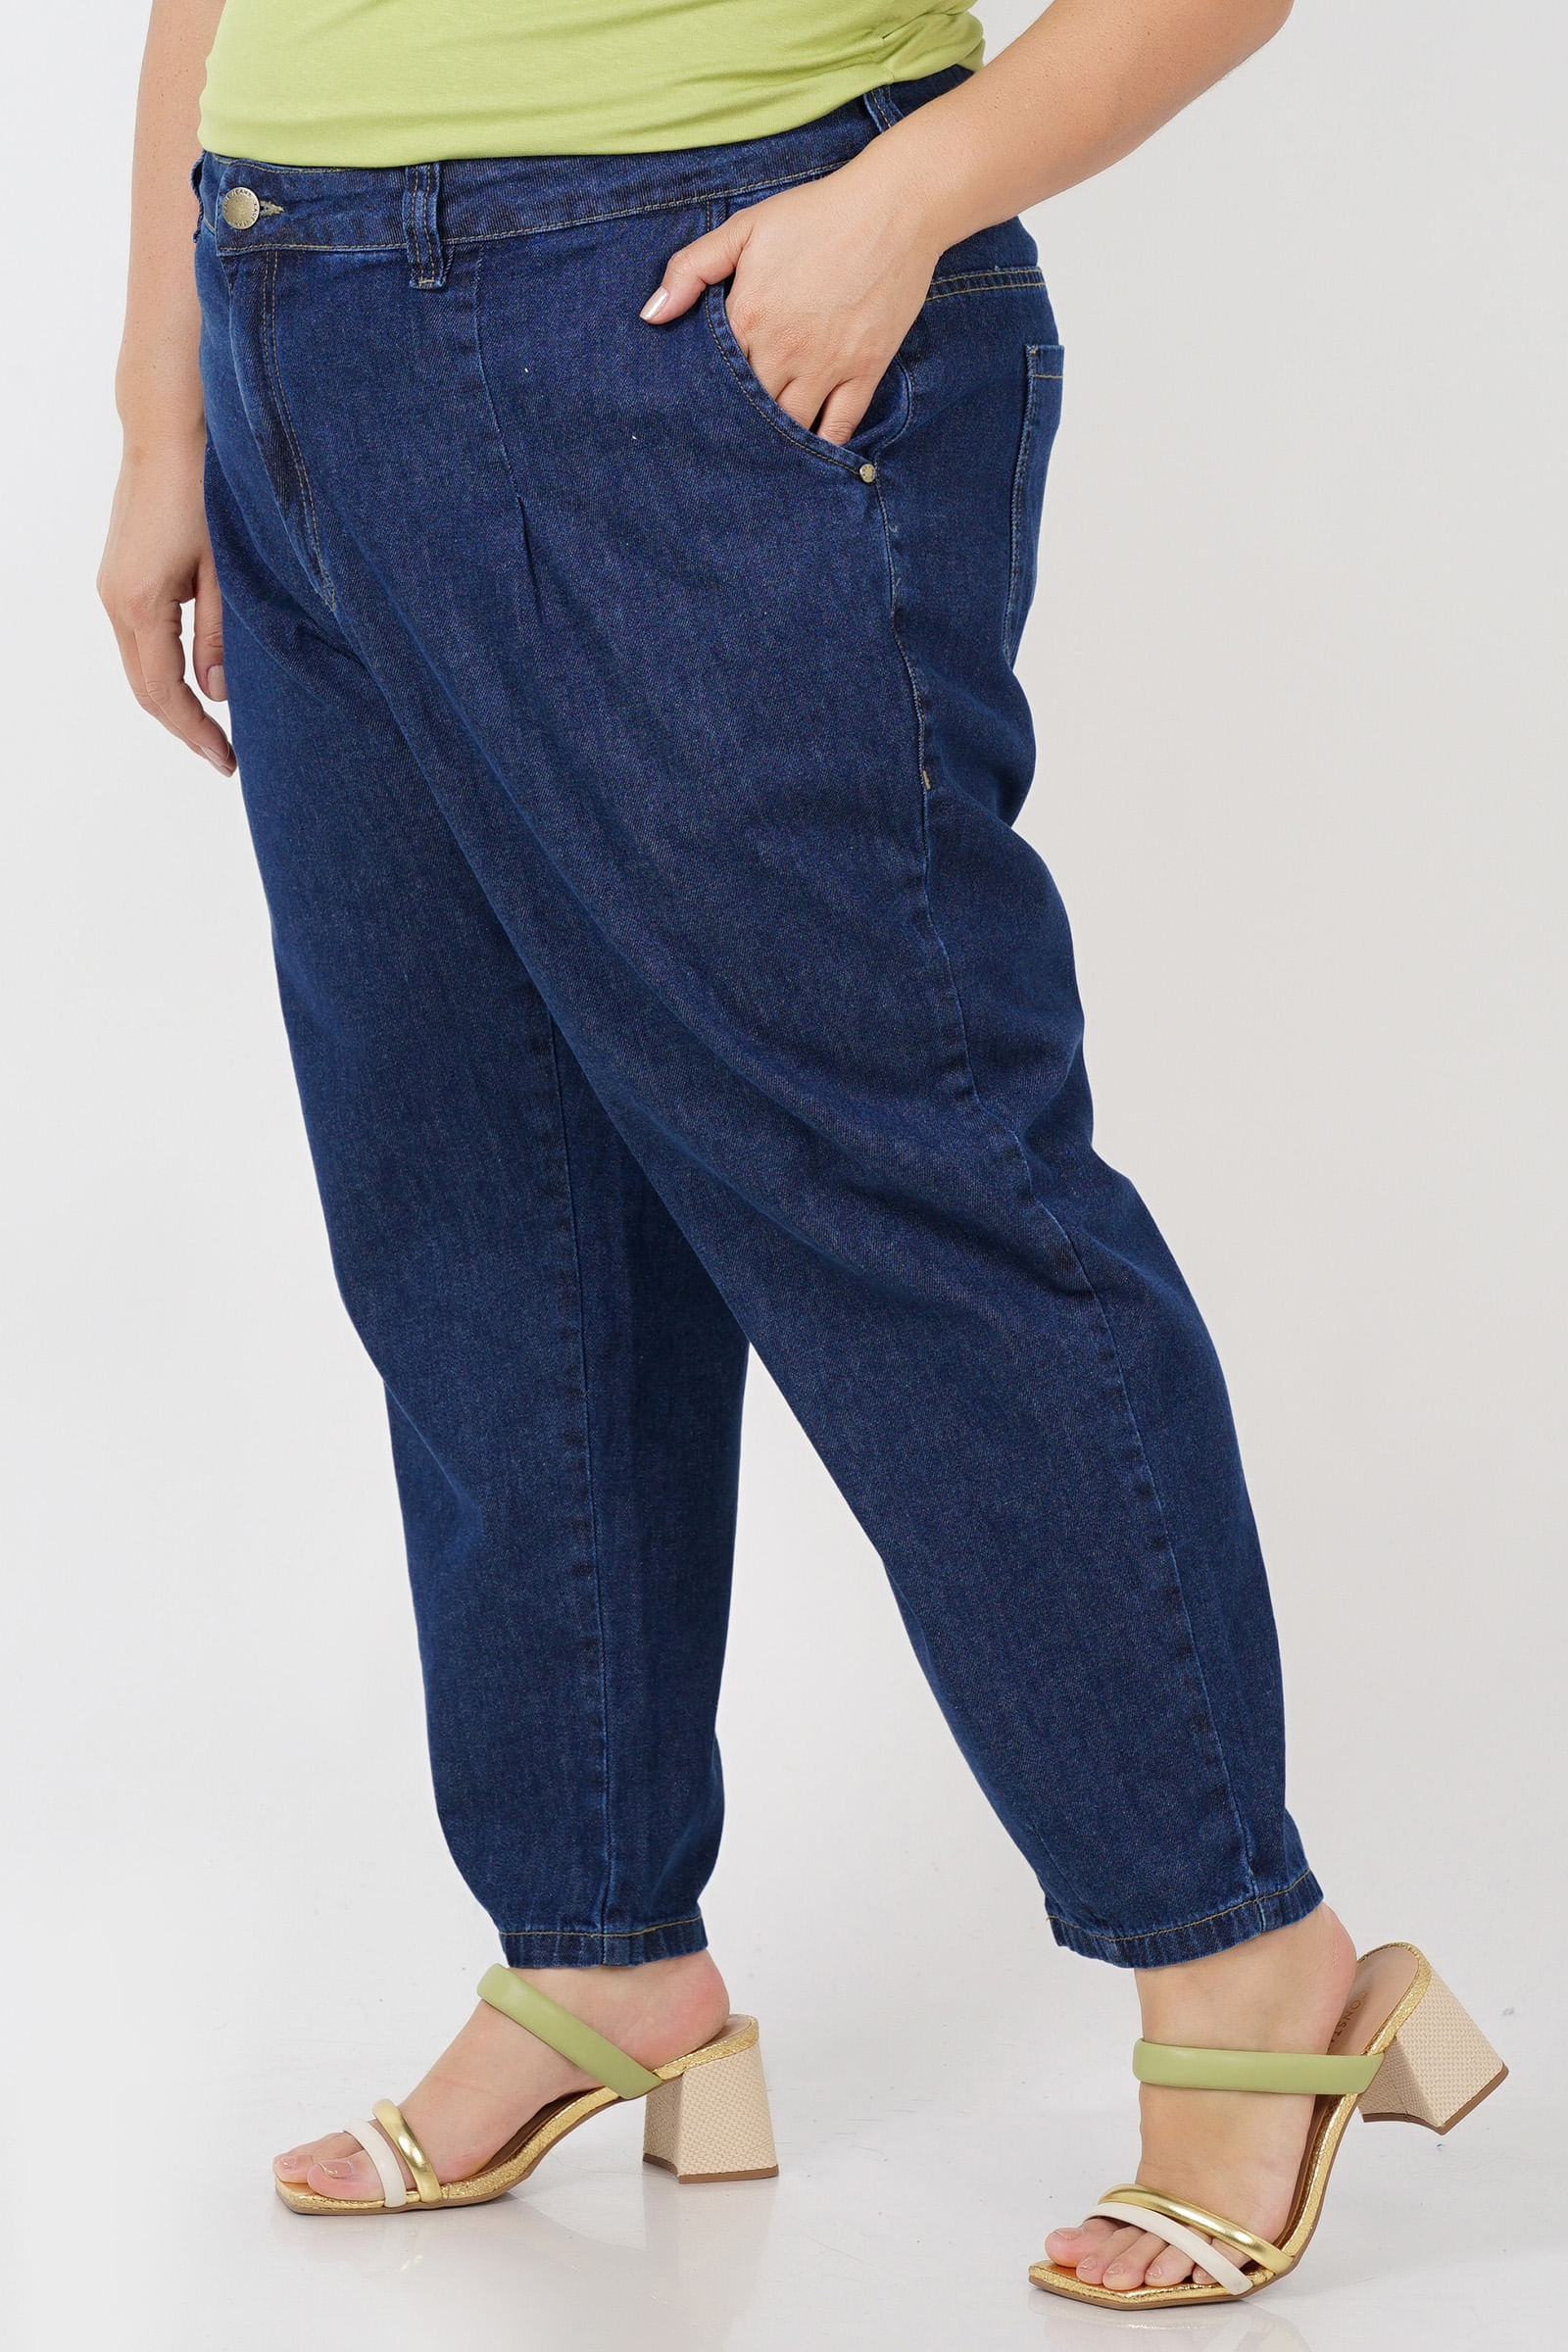 Calca-slouchy-jeans-plus-size_0102_1